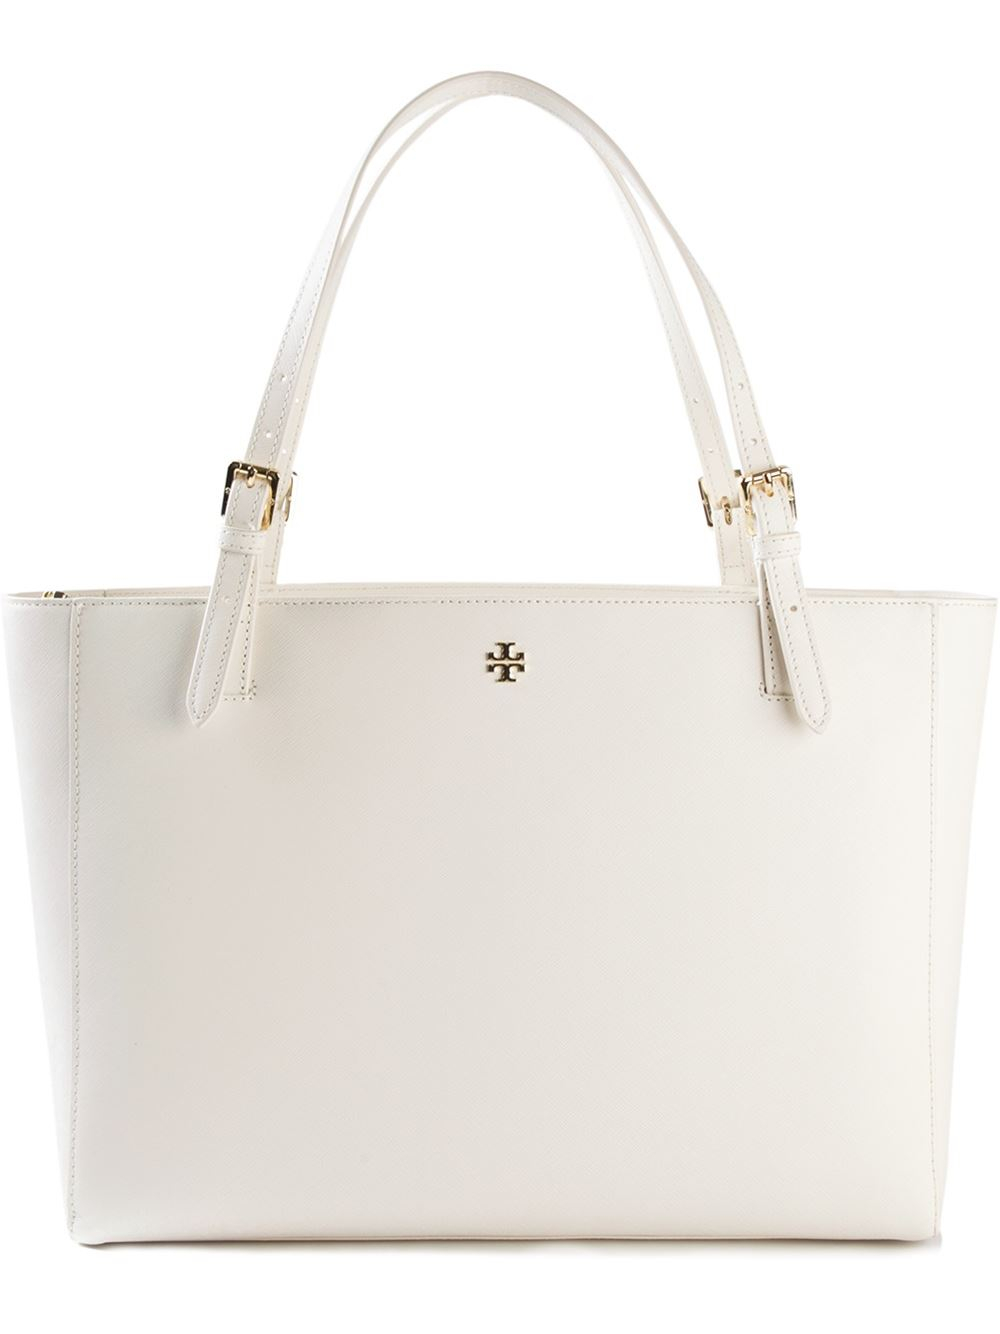 NEW Tory Burch White SMALL Kira Diamond Quilt Convertible Shoulder Bag $548  | eBay